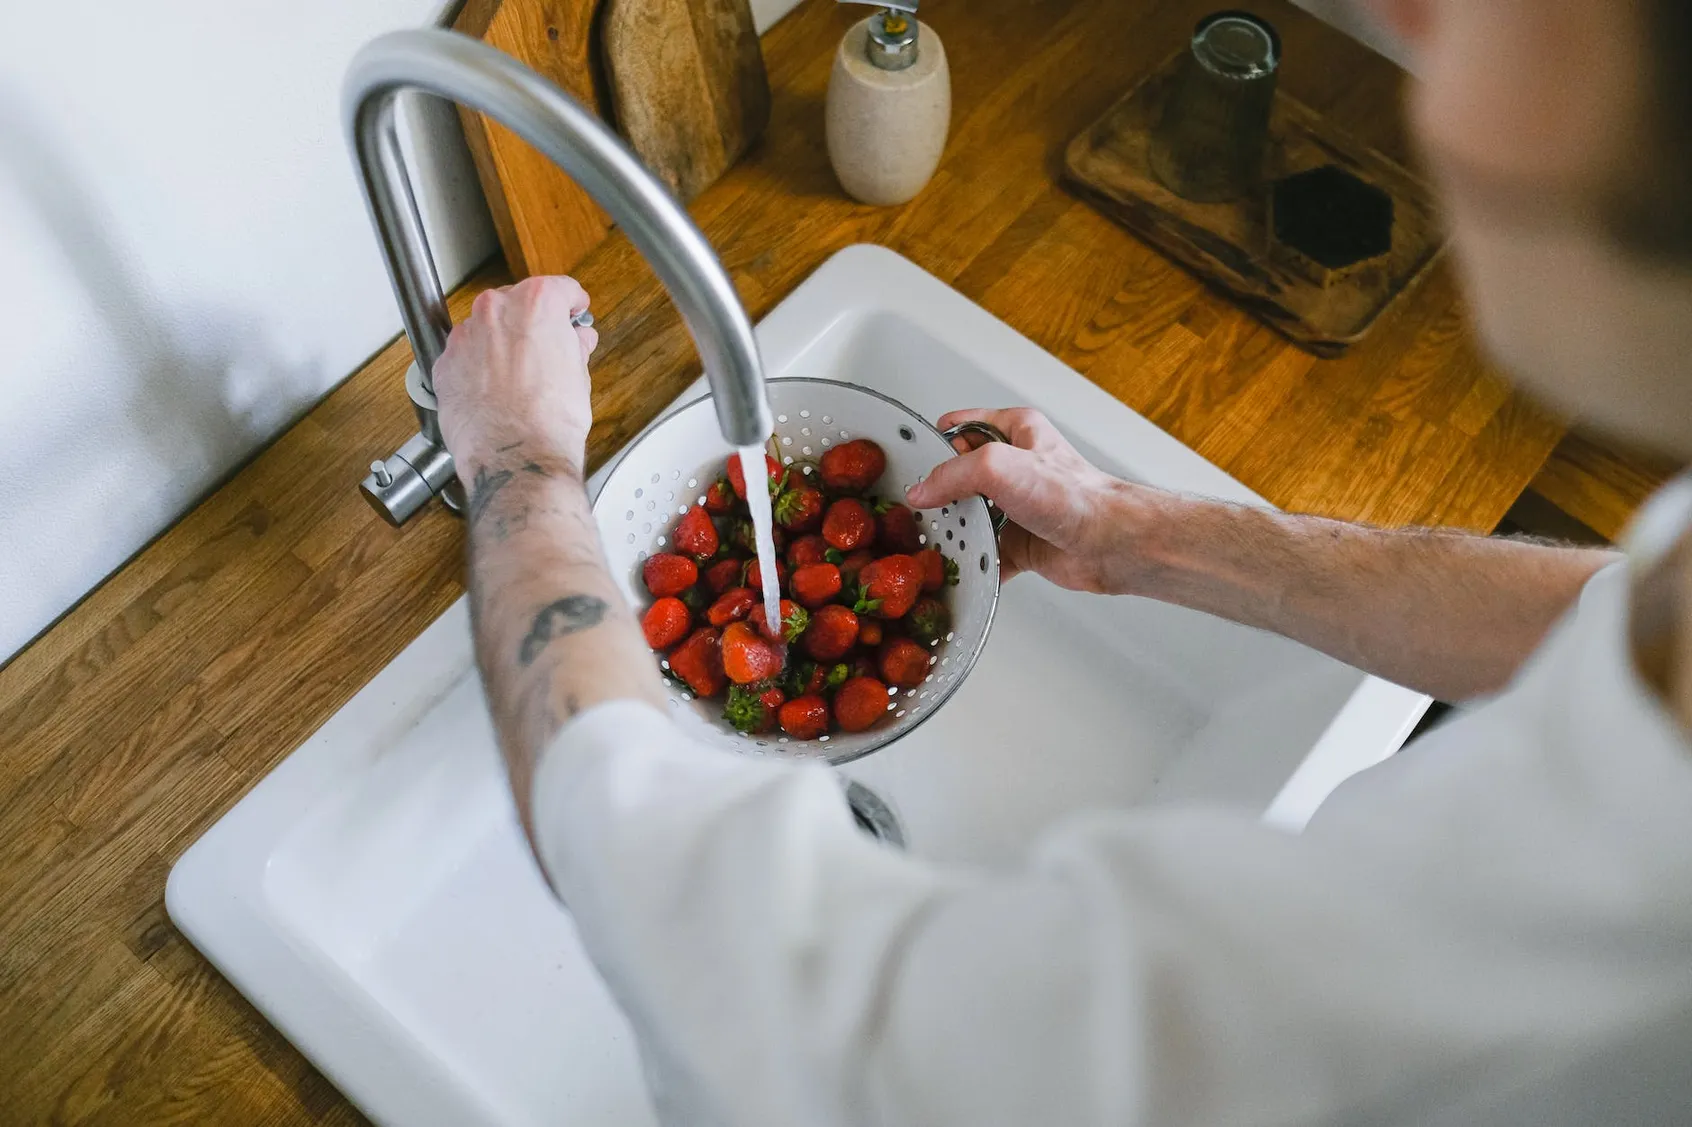 can boiling water make kitchen sink plumbing leak